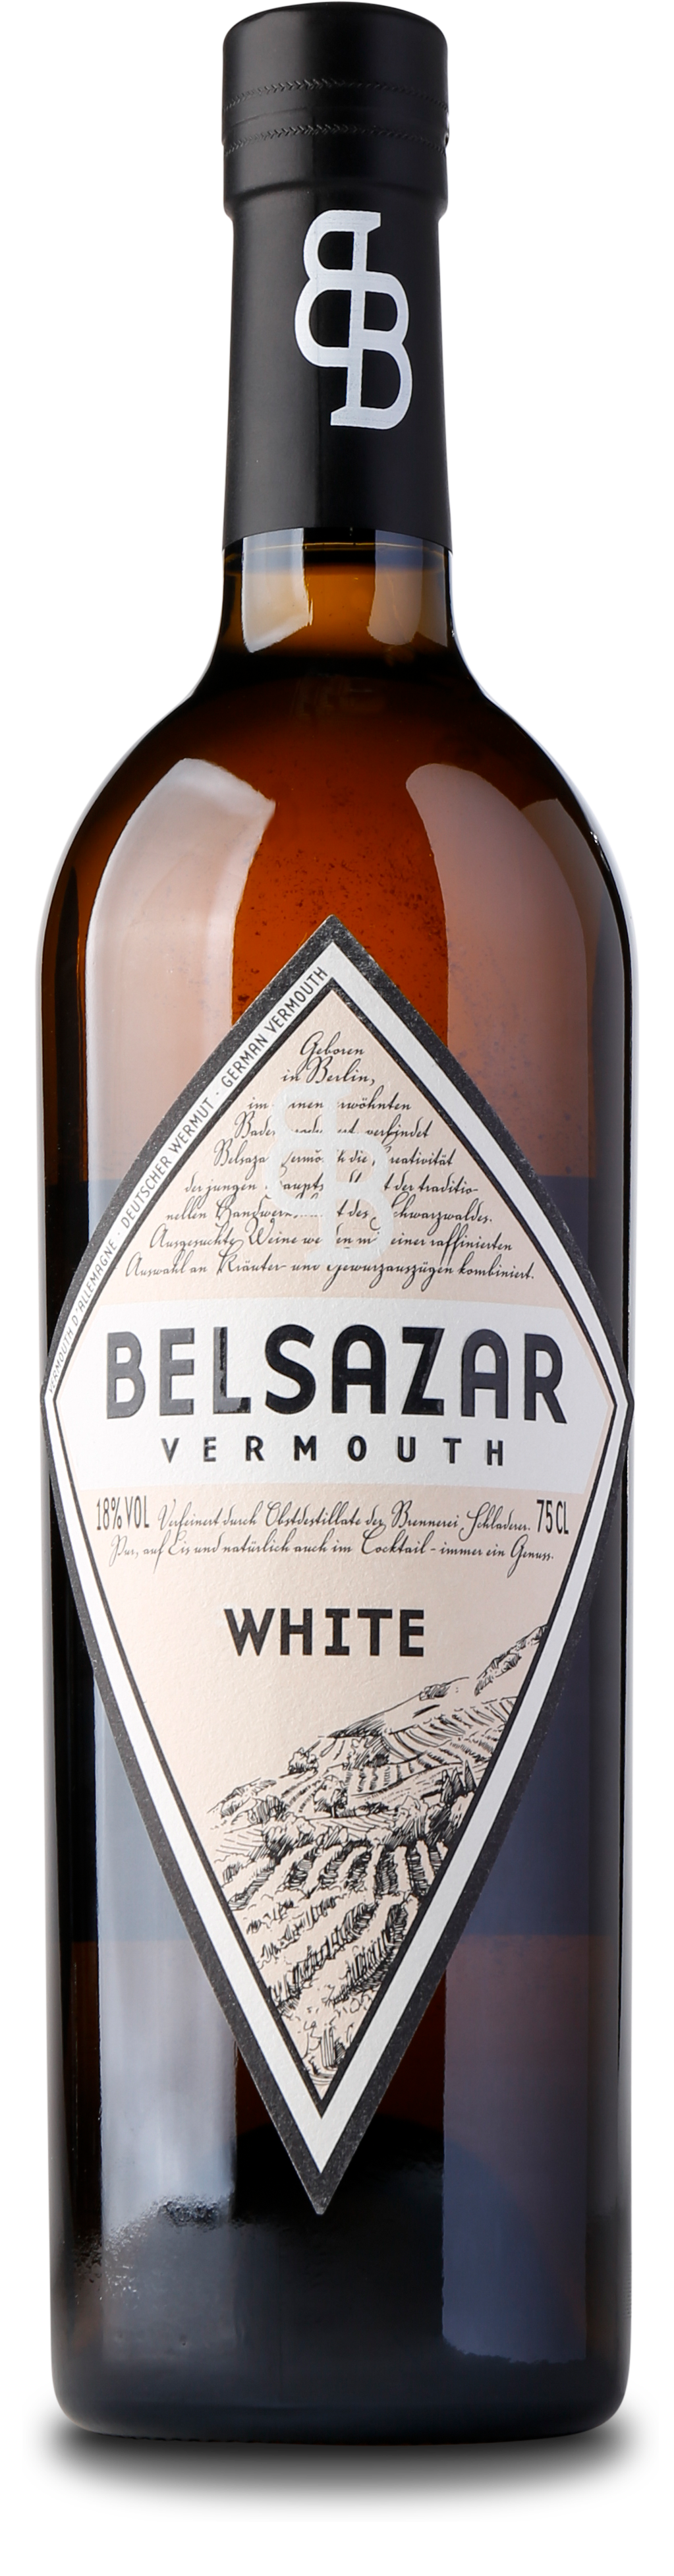 Haushaltswarengeschäft Vermouth fra Belsazar - Køb fra Belsazar online Vermouth tysk